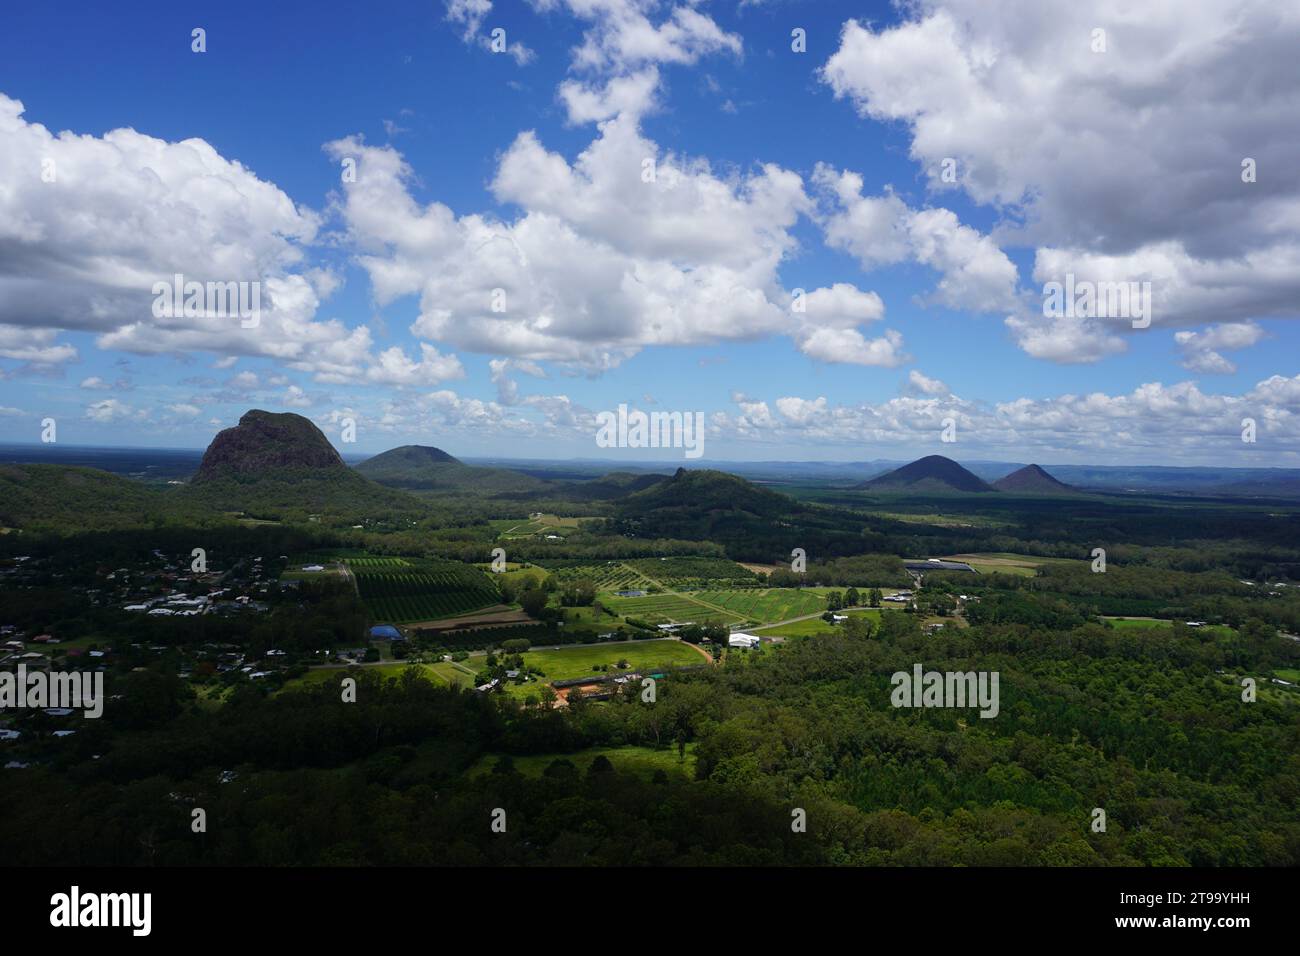 Vista panoramica del monte Tibberoowuccum e del monte Tibrogargan dalla cima del monte Ngungun nelle Glass House Mountains, Queensland, Australia Foto Stock